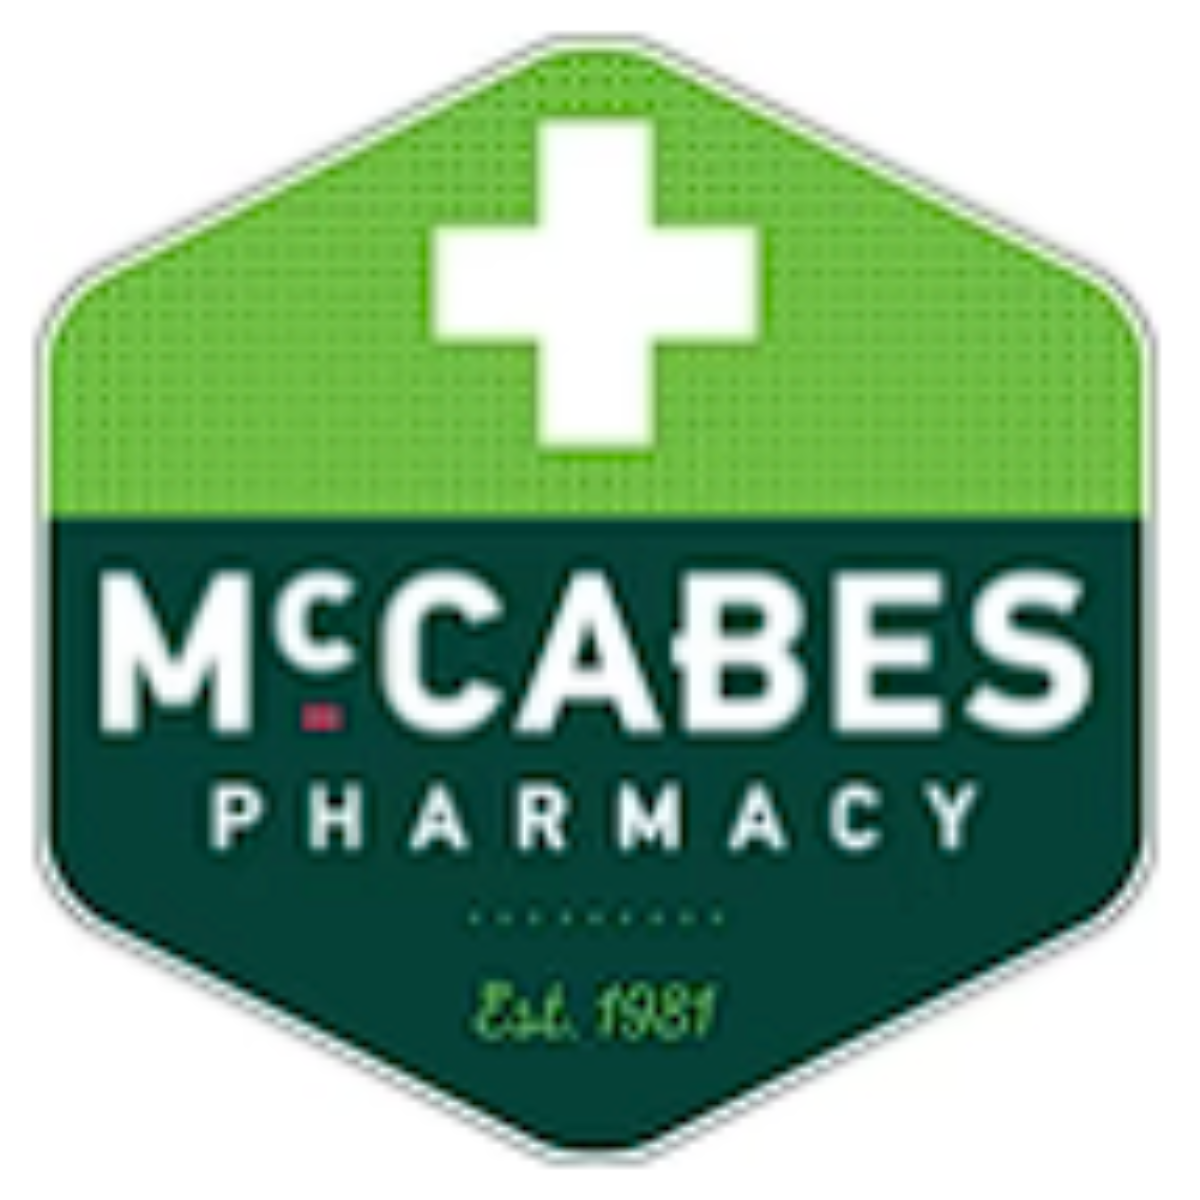 McCabes Pharmacy Santry